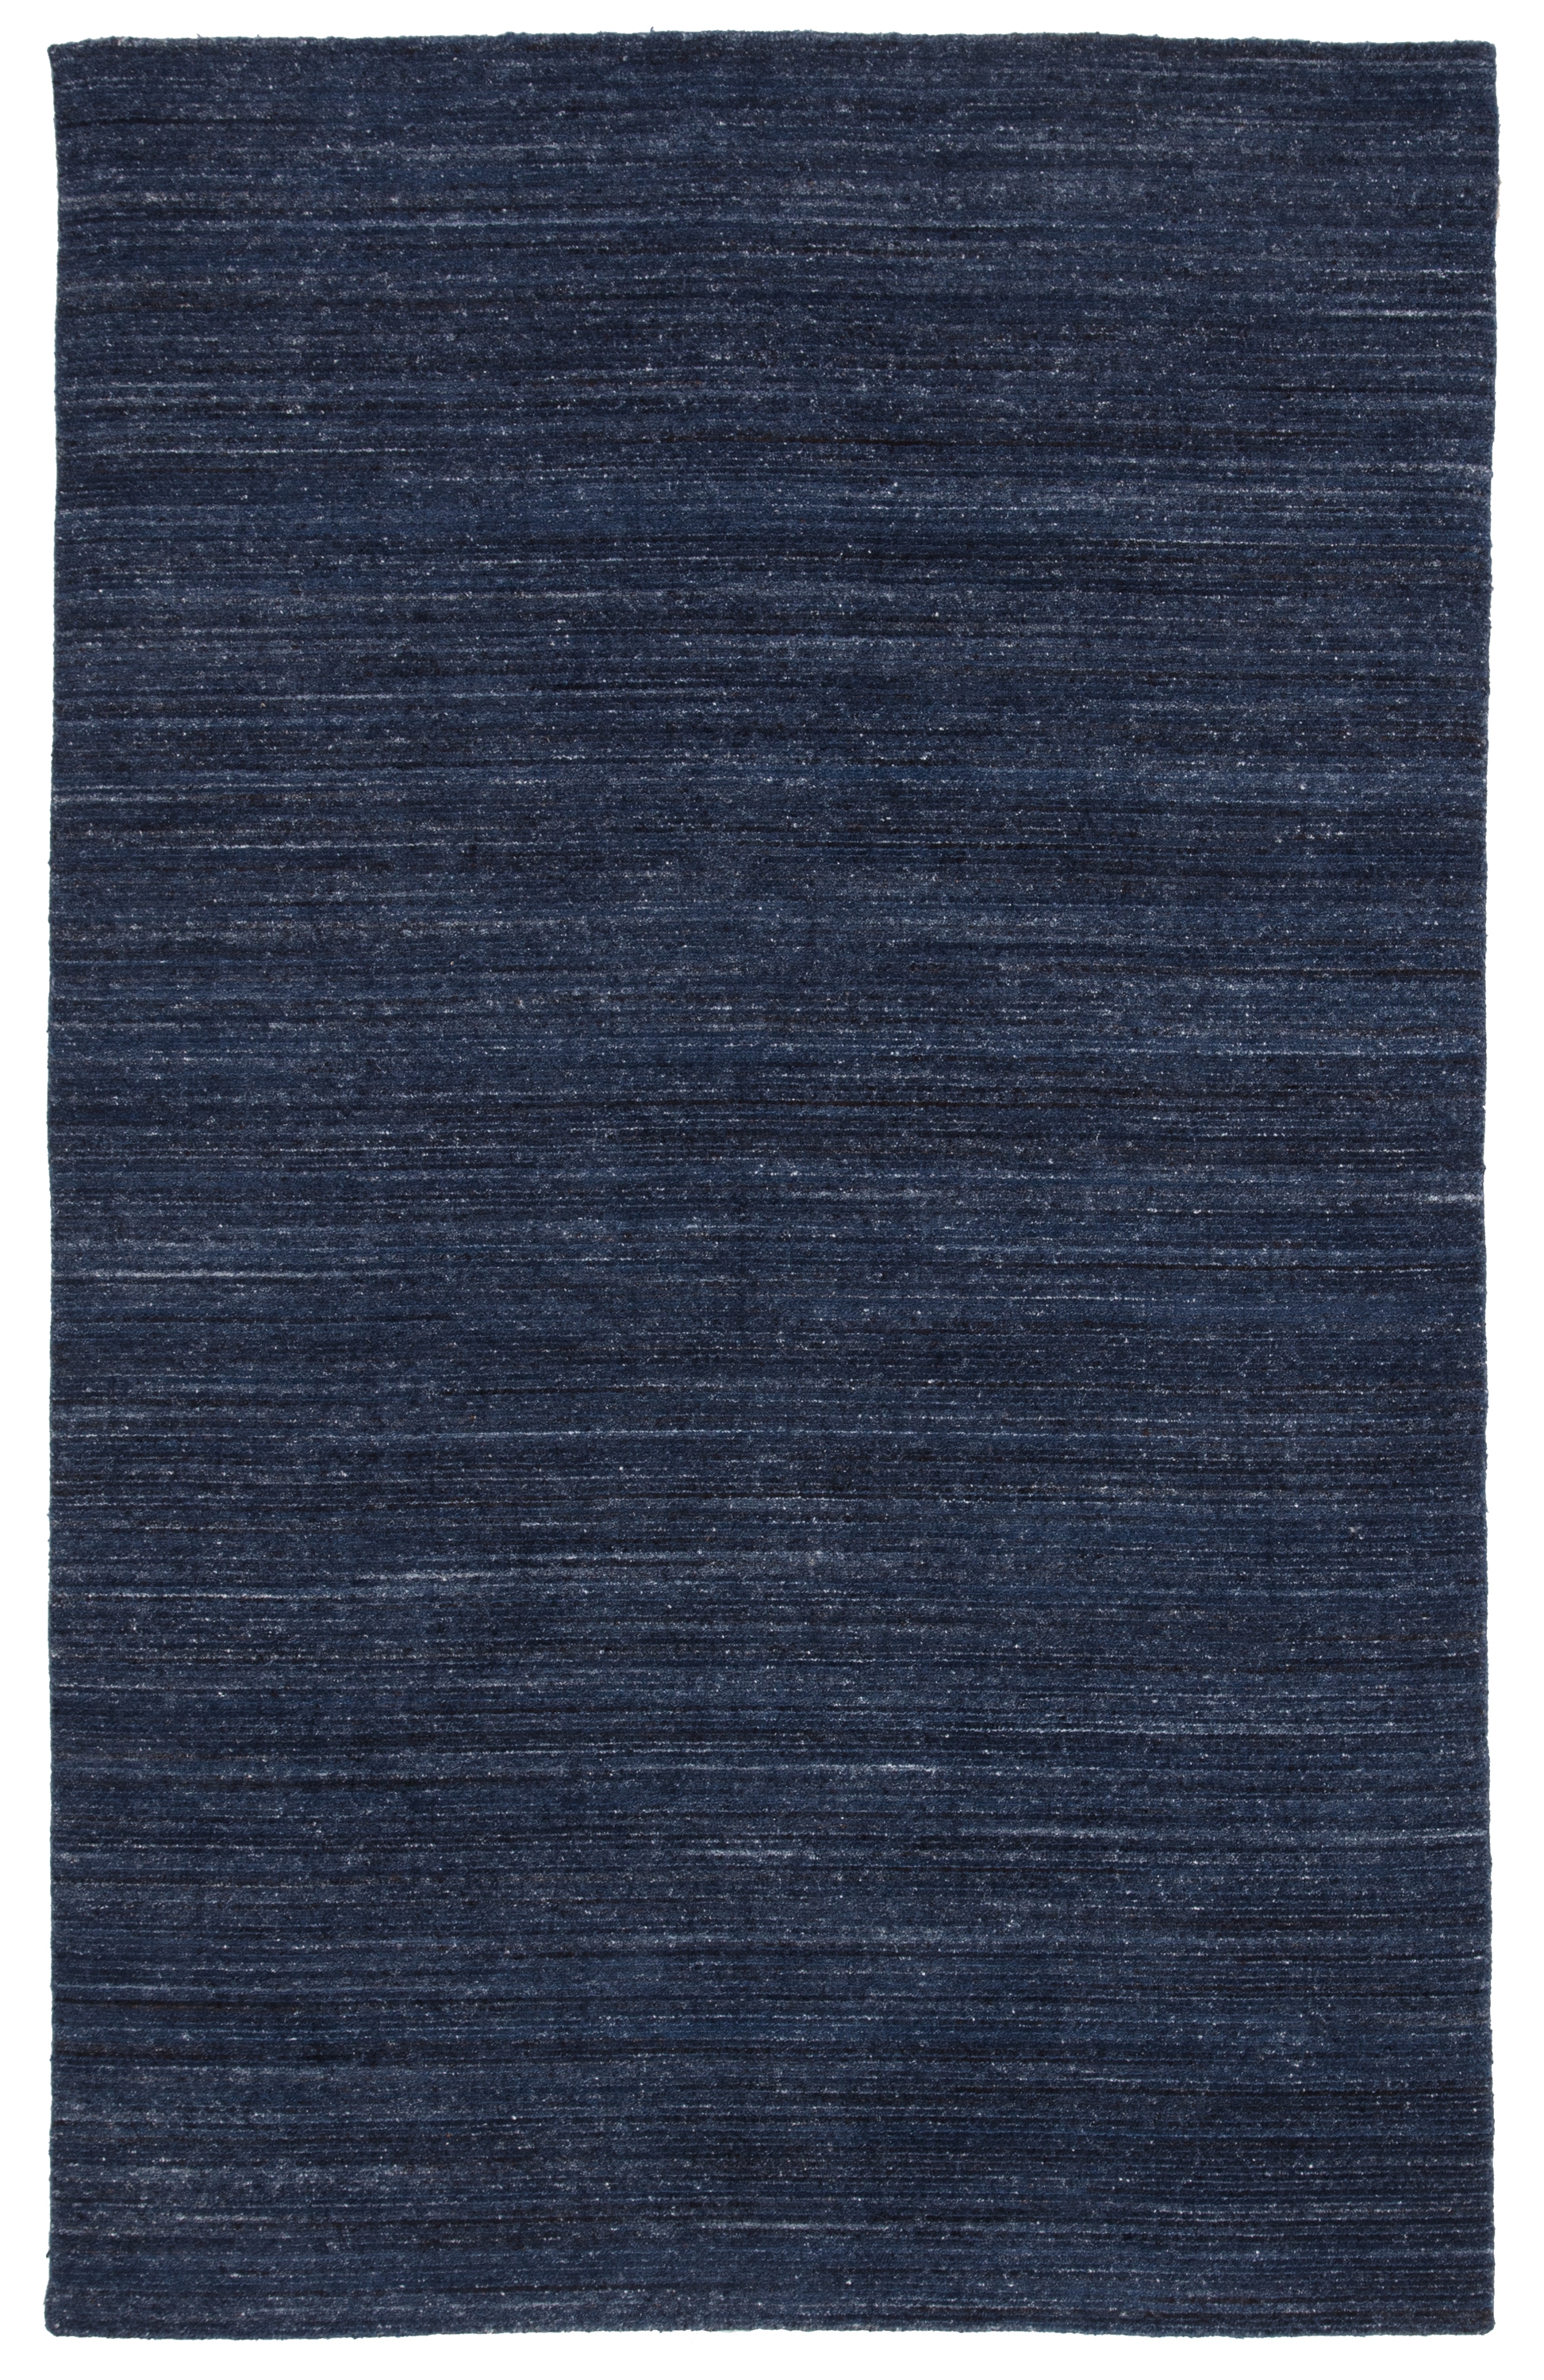 Vassa Handmade Solid Dark Blue Area Rug (8'X11') - Image 0